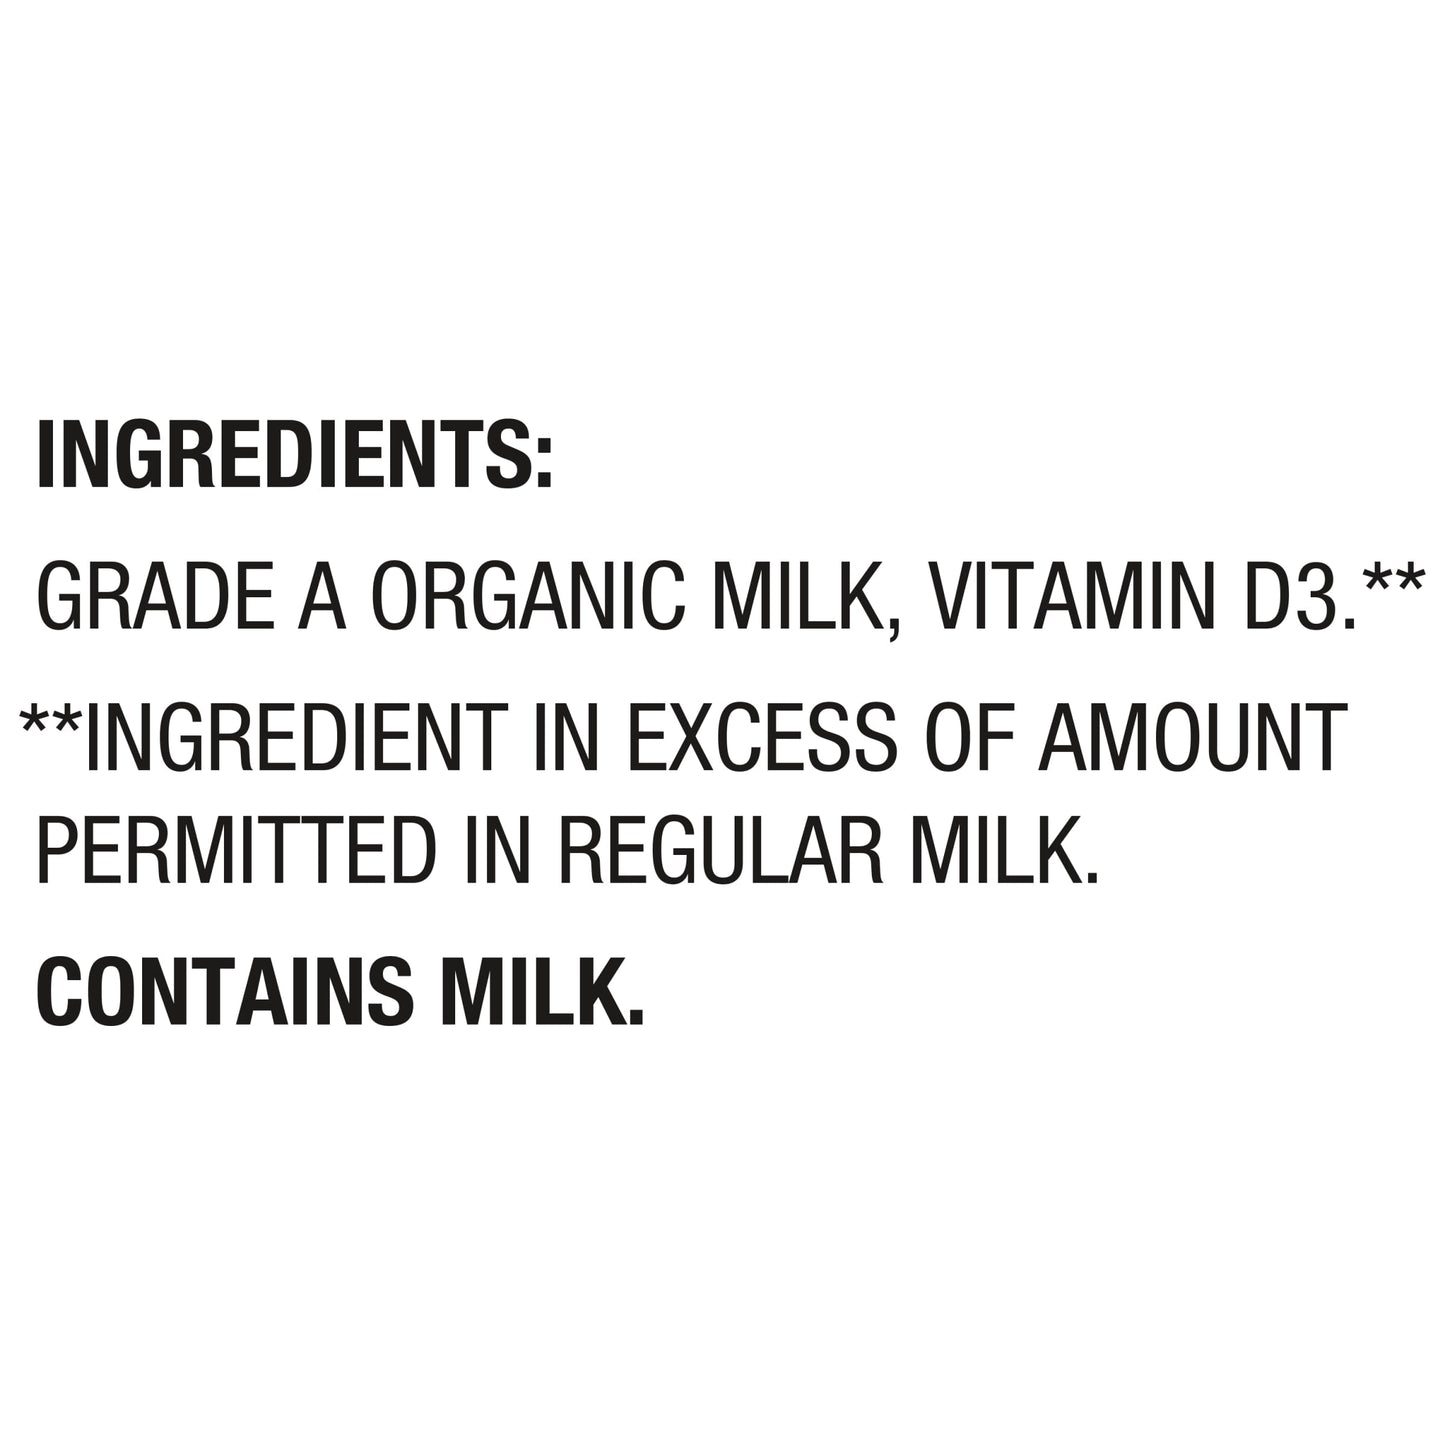 Horizon Organic Whole High Vitamin D Milk, Half Gallon